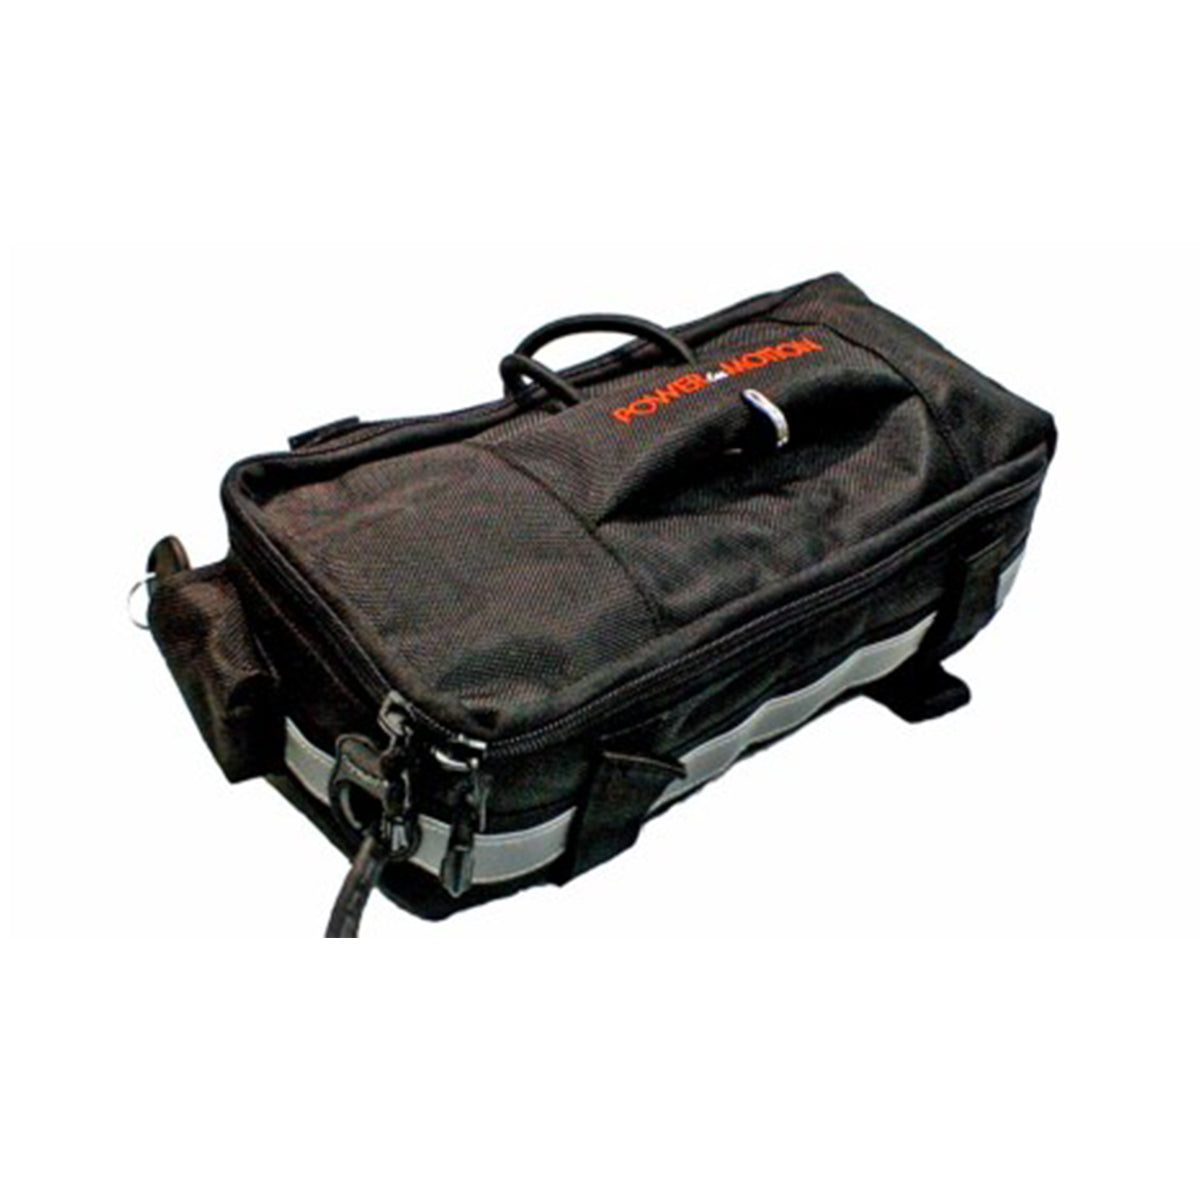 PIM RB304 Rear Key Switch Bag - Power in Motion